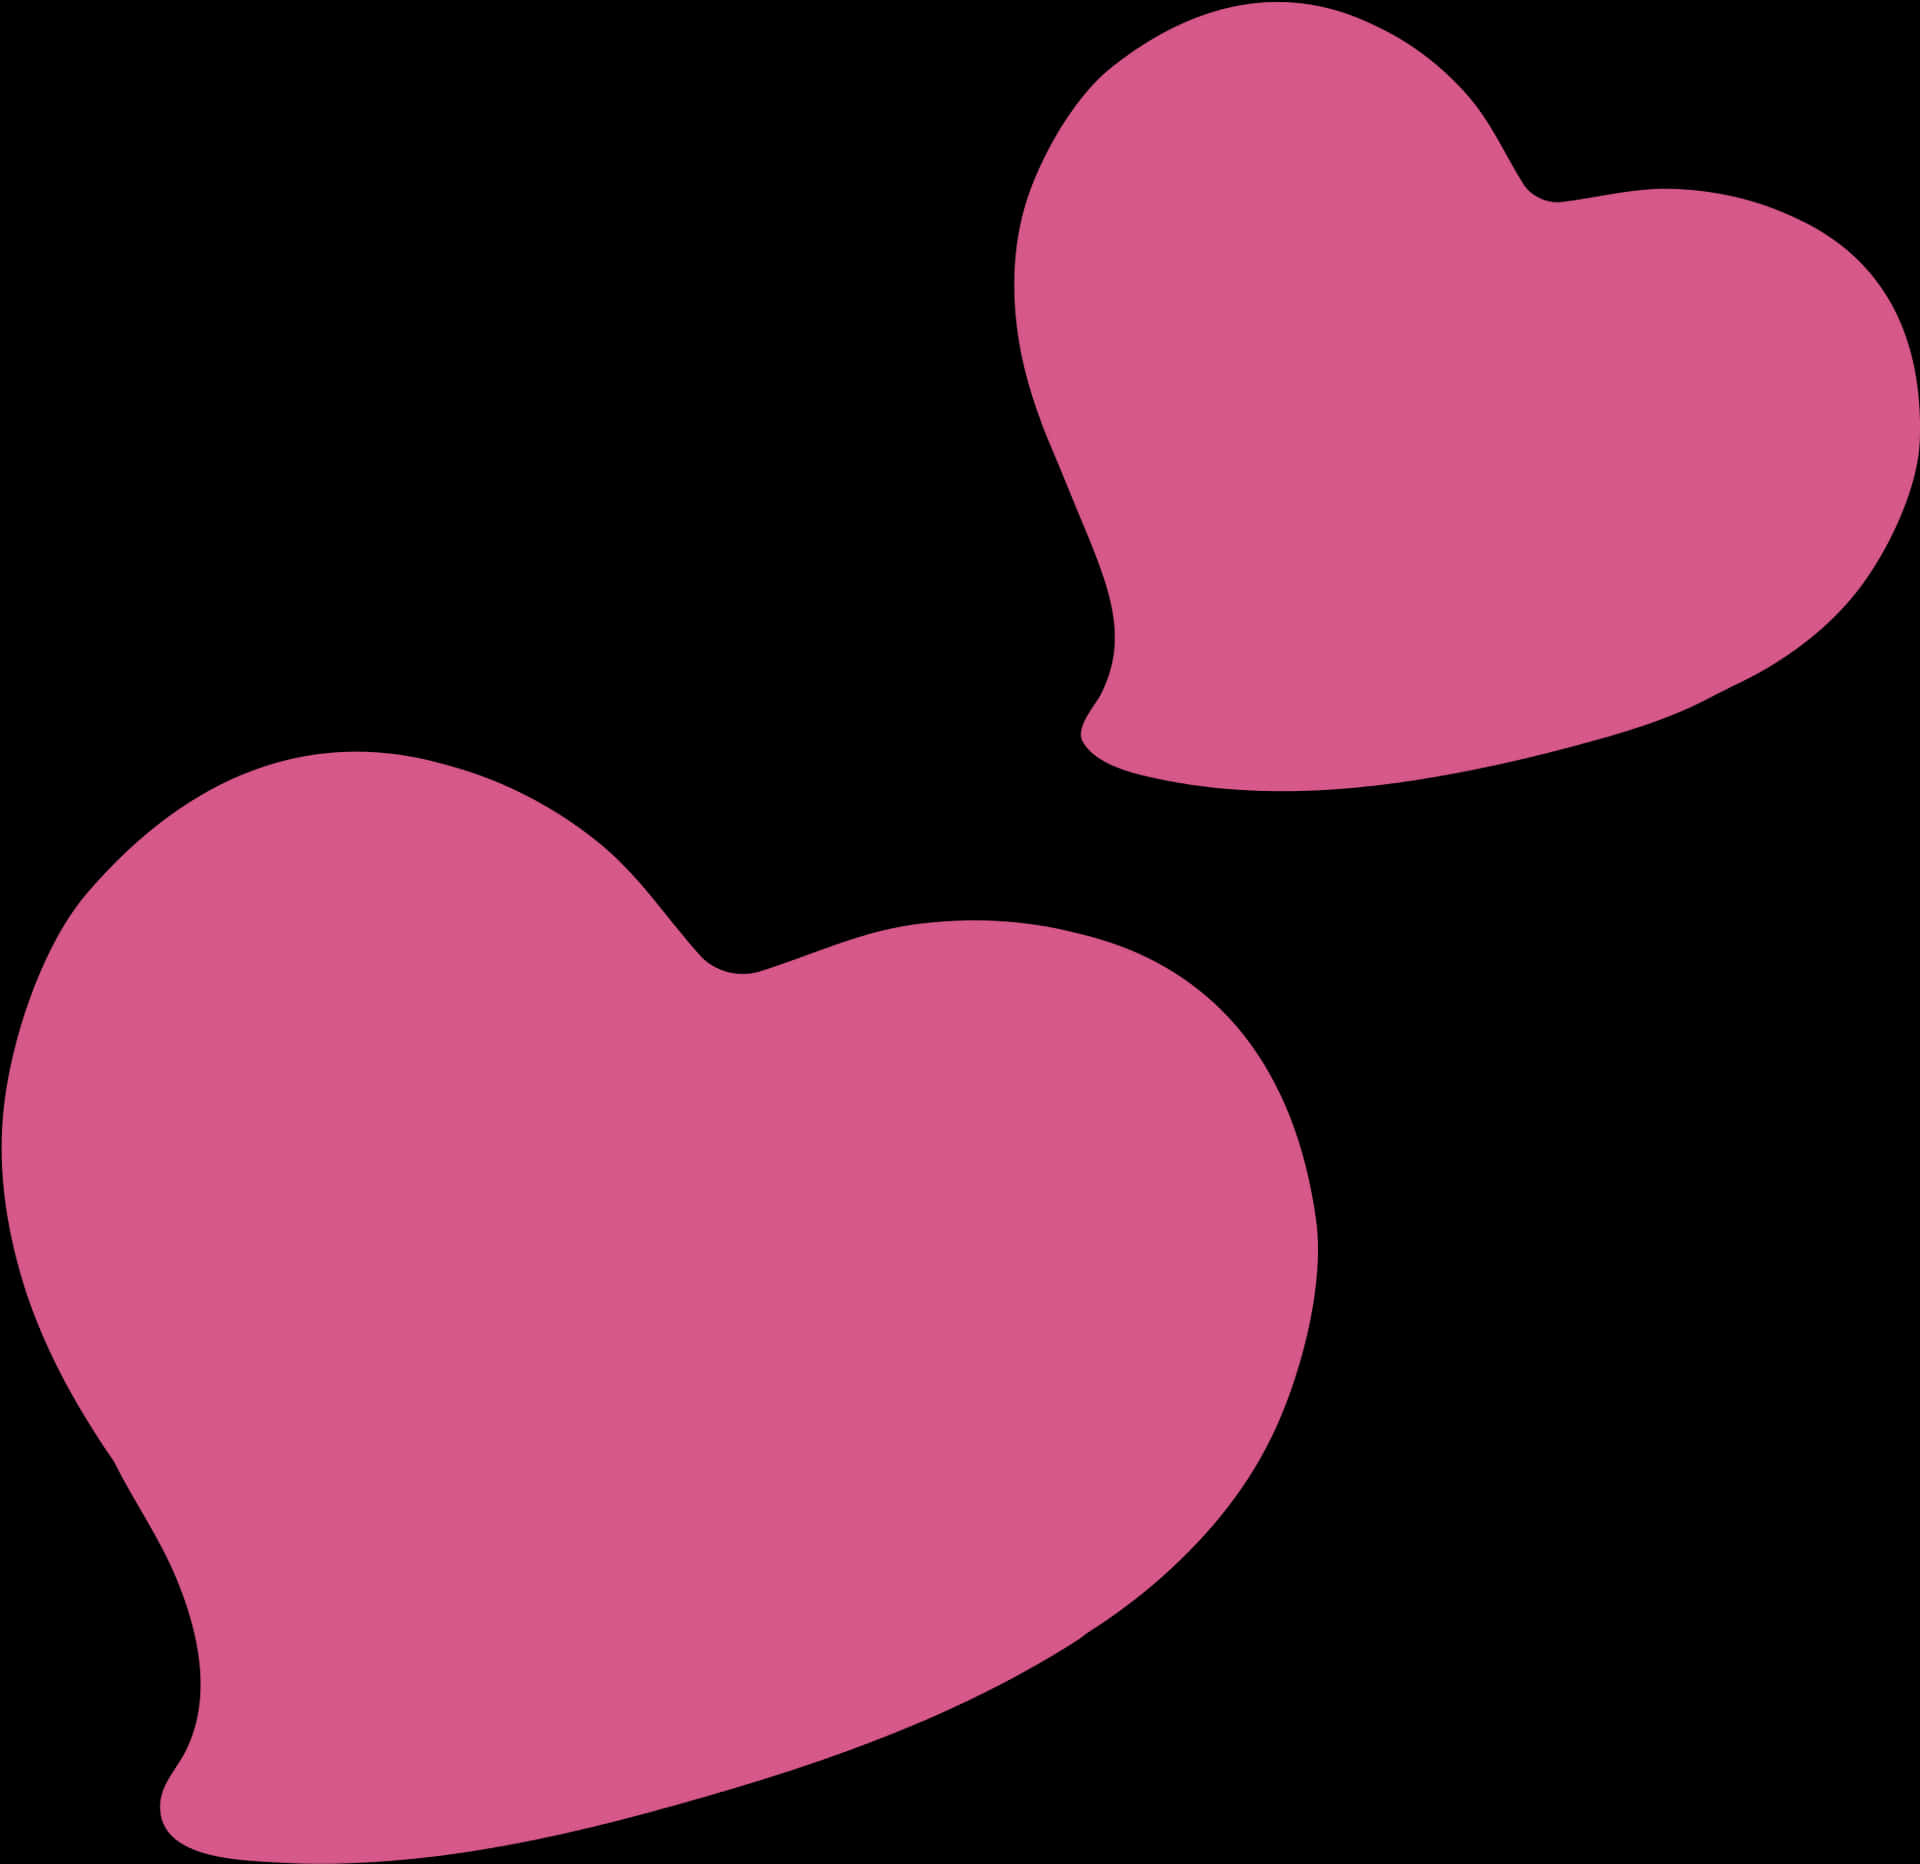 Pink Hearts Black Background PNG image